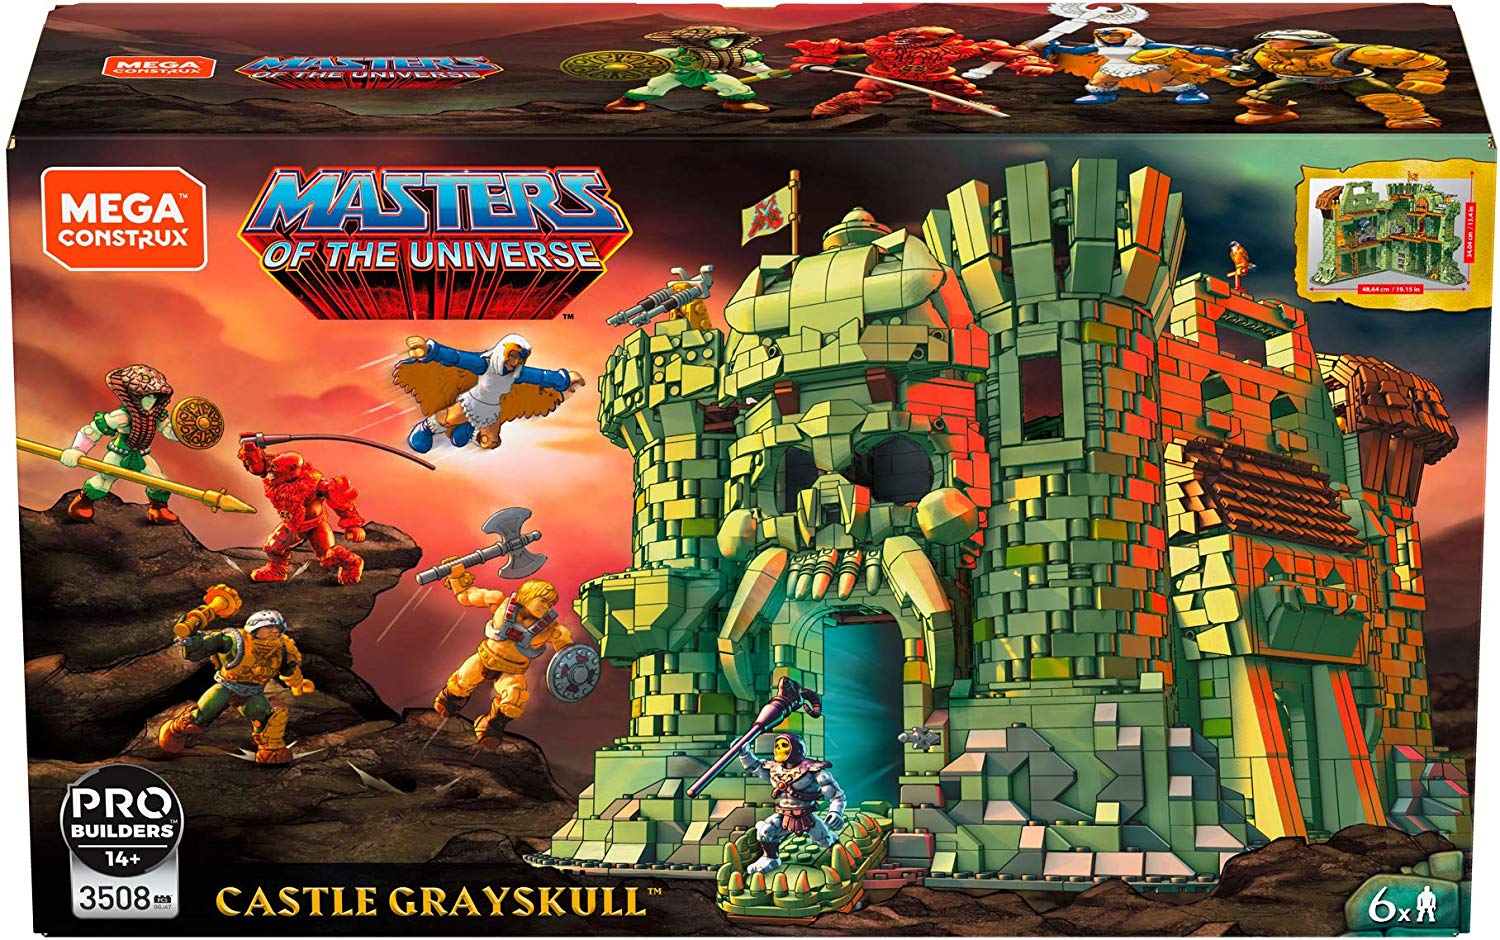 Mattel Mega Construx Ggj67 Masters Of The Universe Castle Grayskull